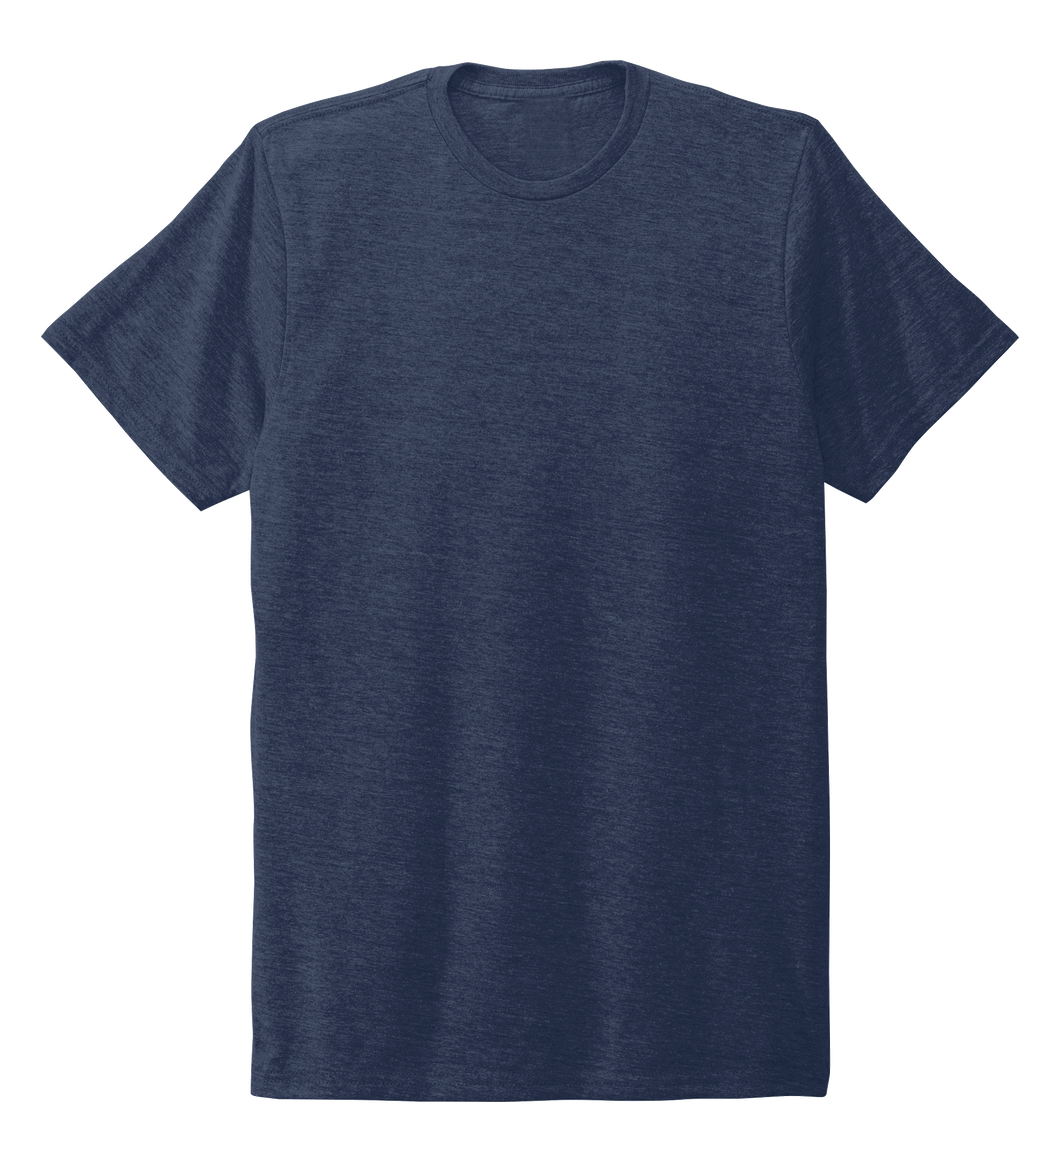 Unisex Crew Neck T-shirt in Deep Sea Blue